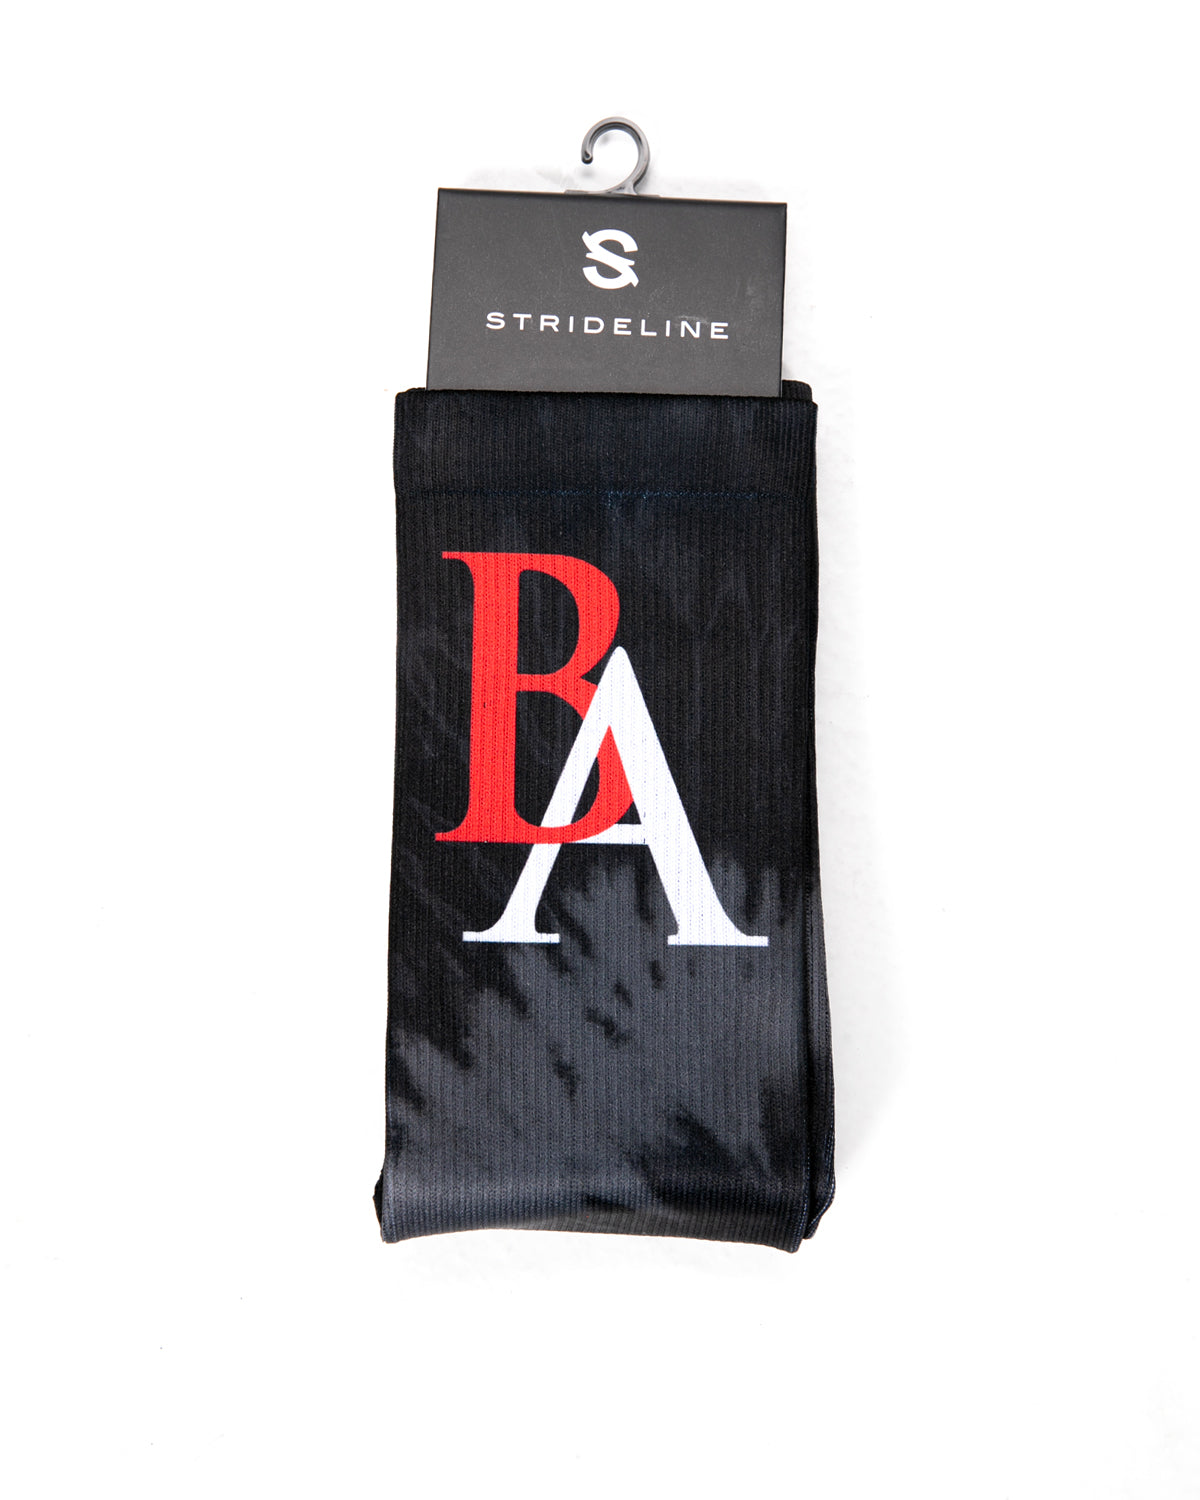 BA Crew Socks - Black Tie Dye